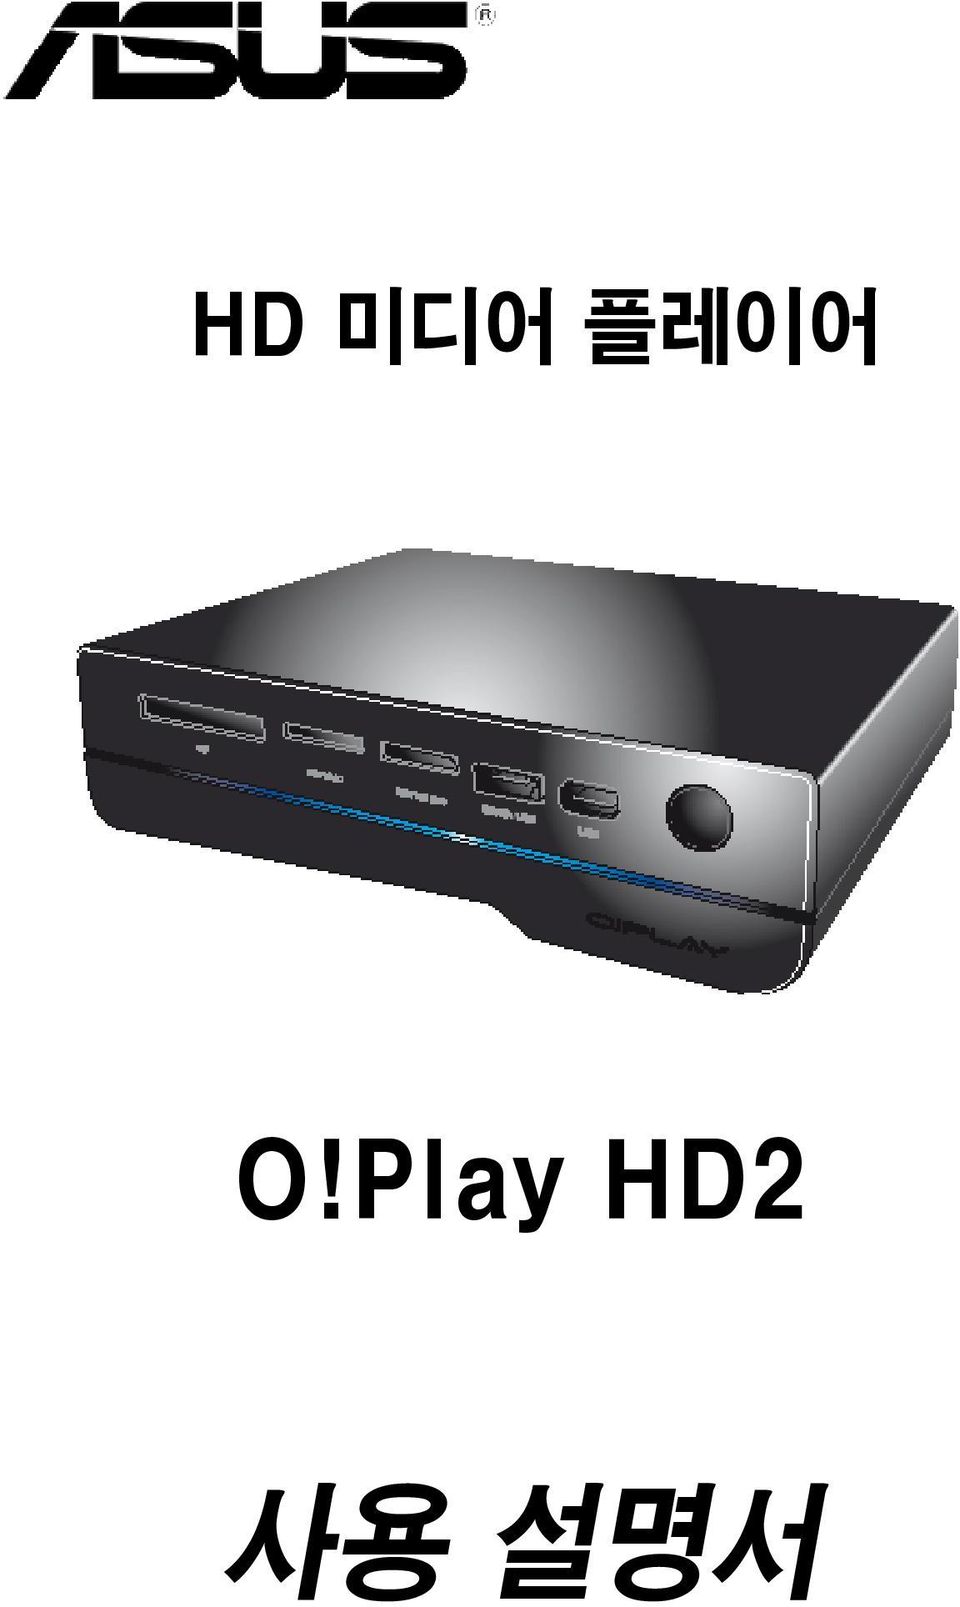 Play HD2